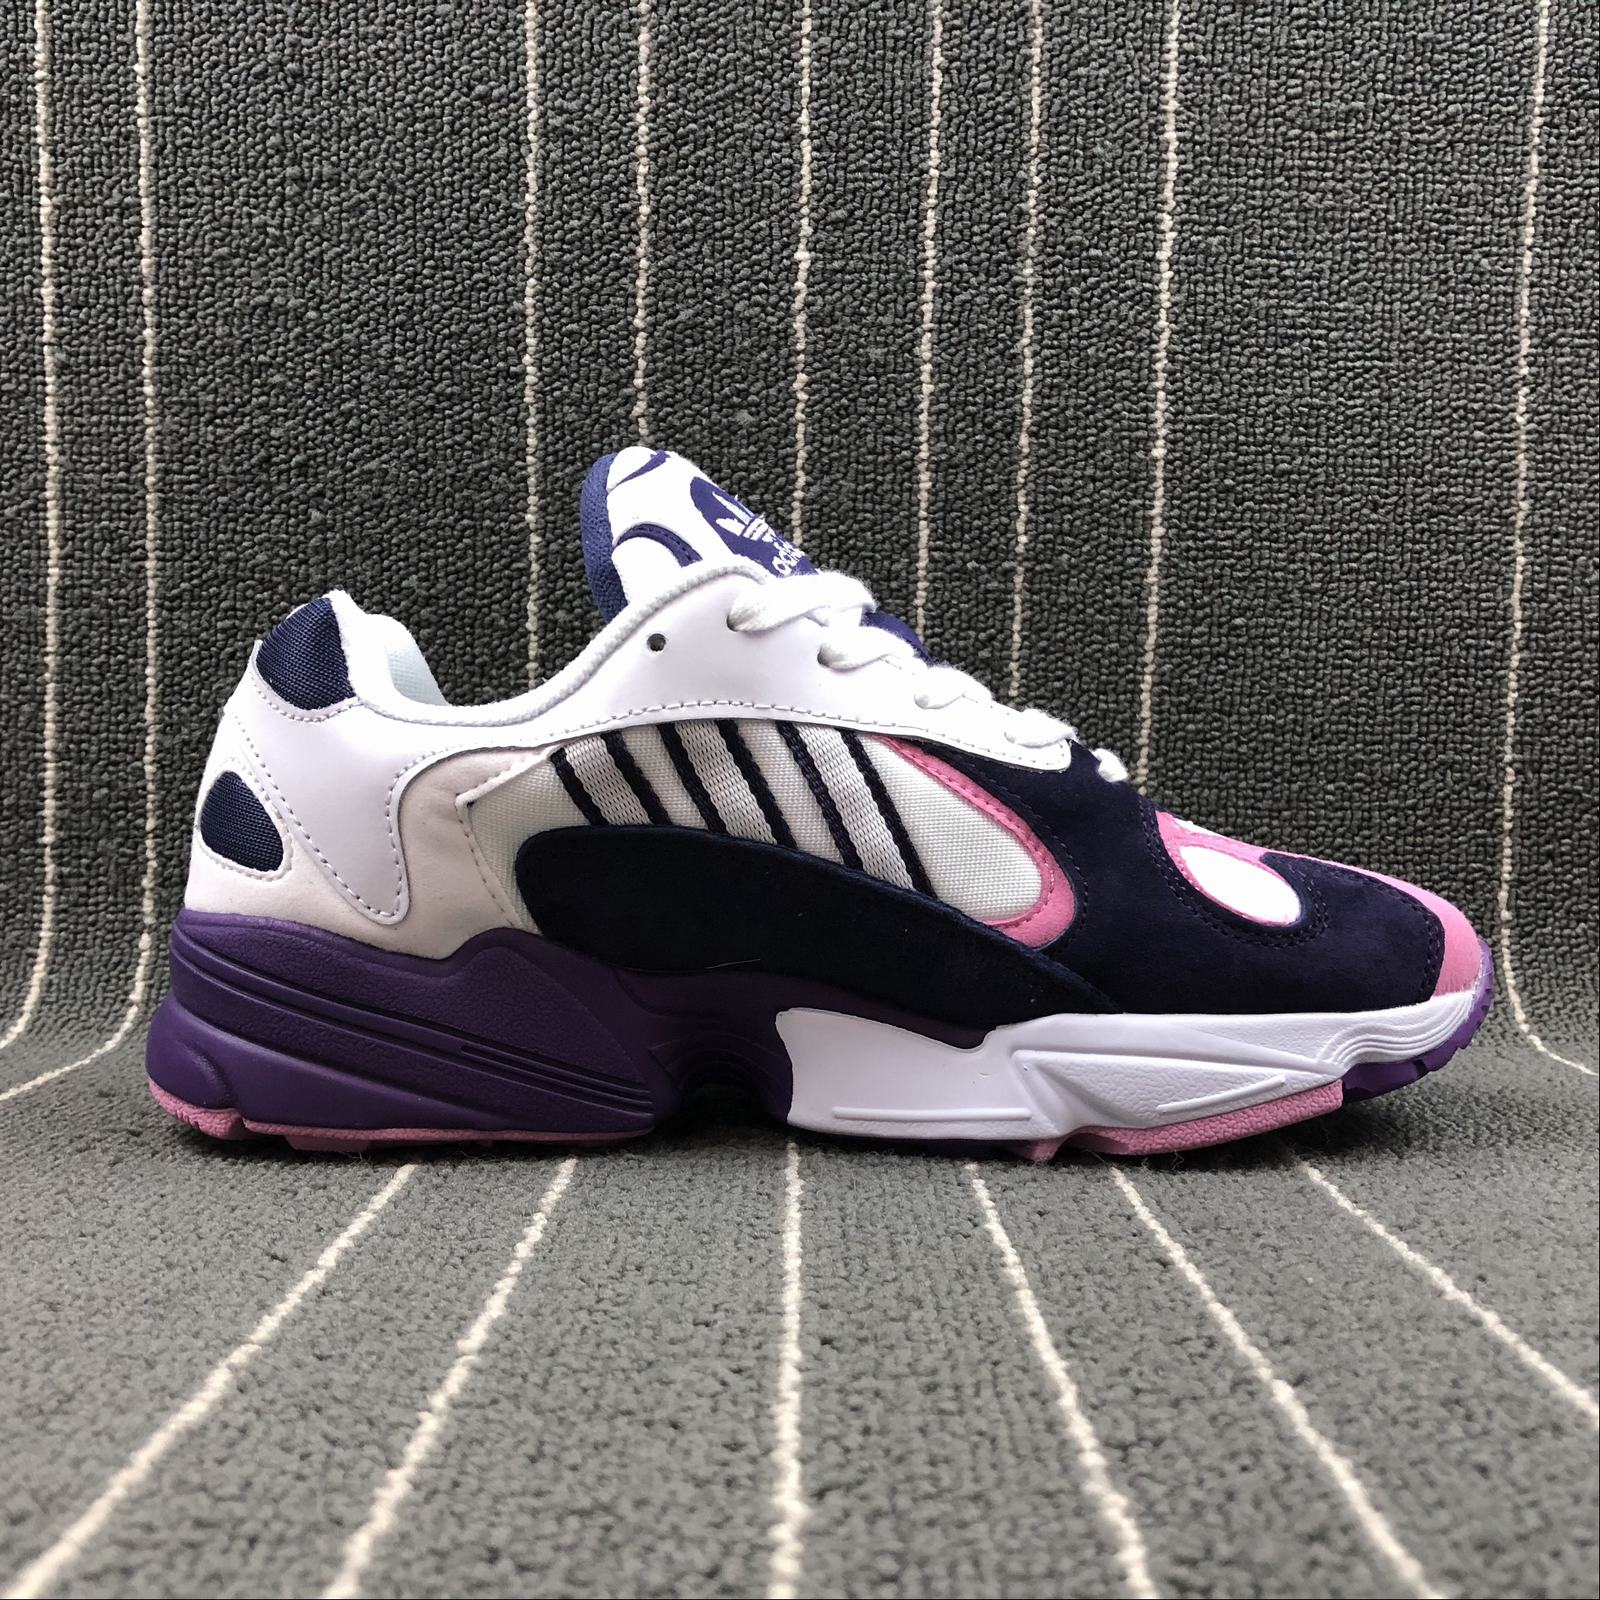 adidas dragon ball z purple